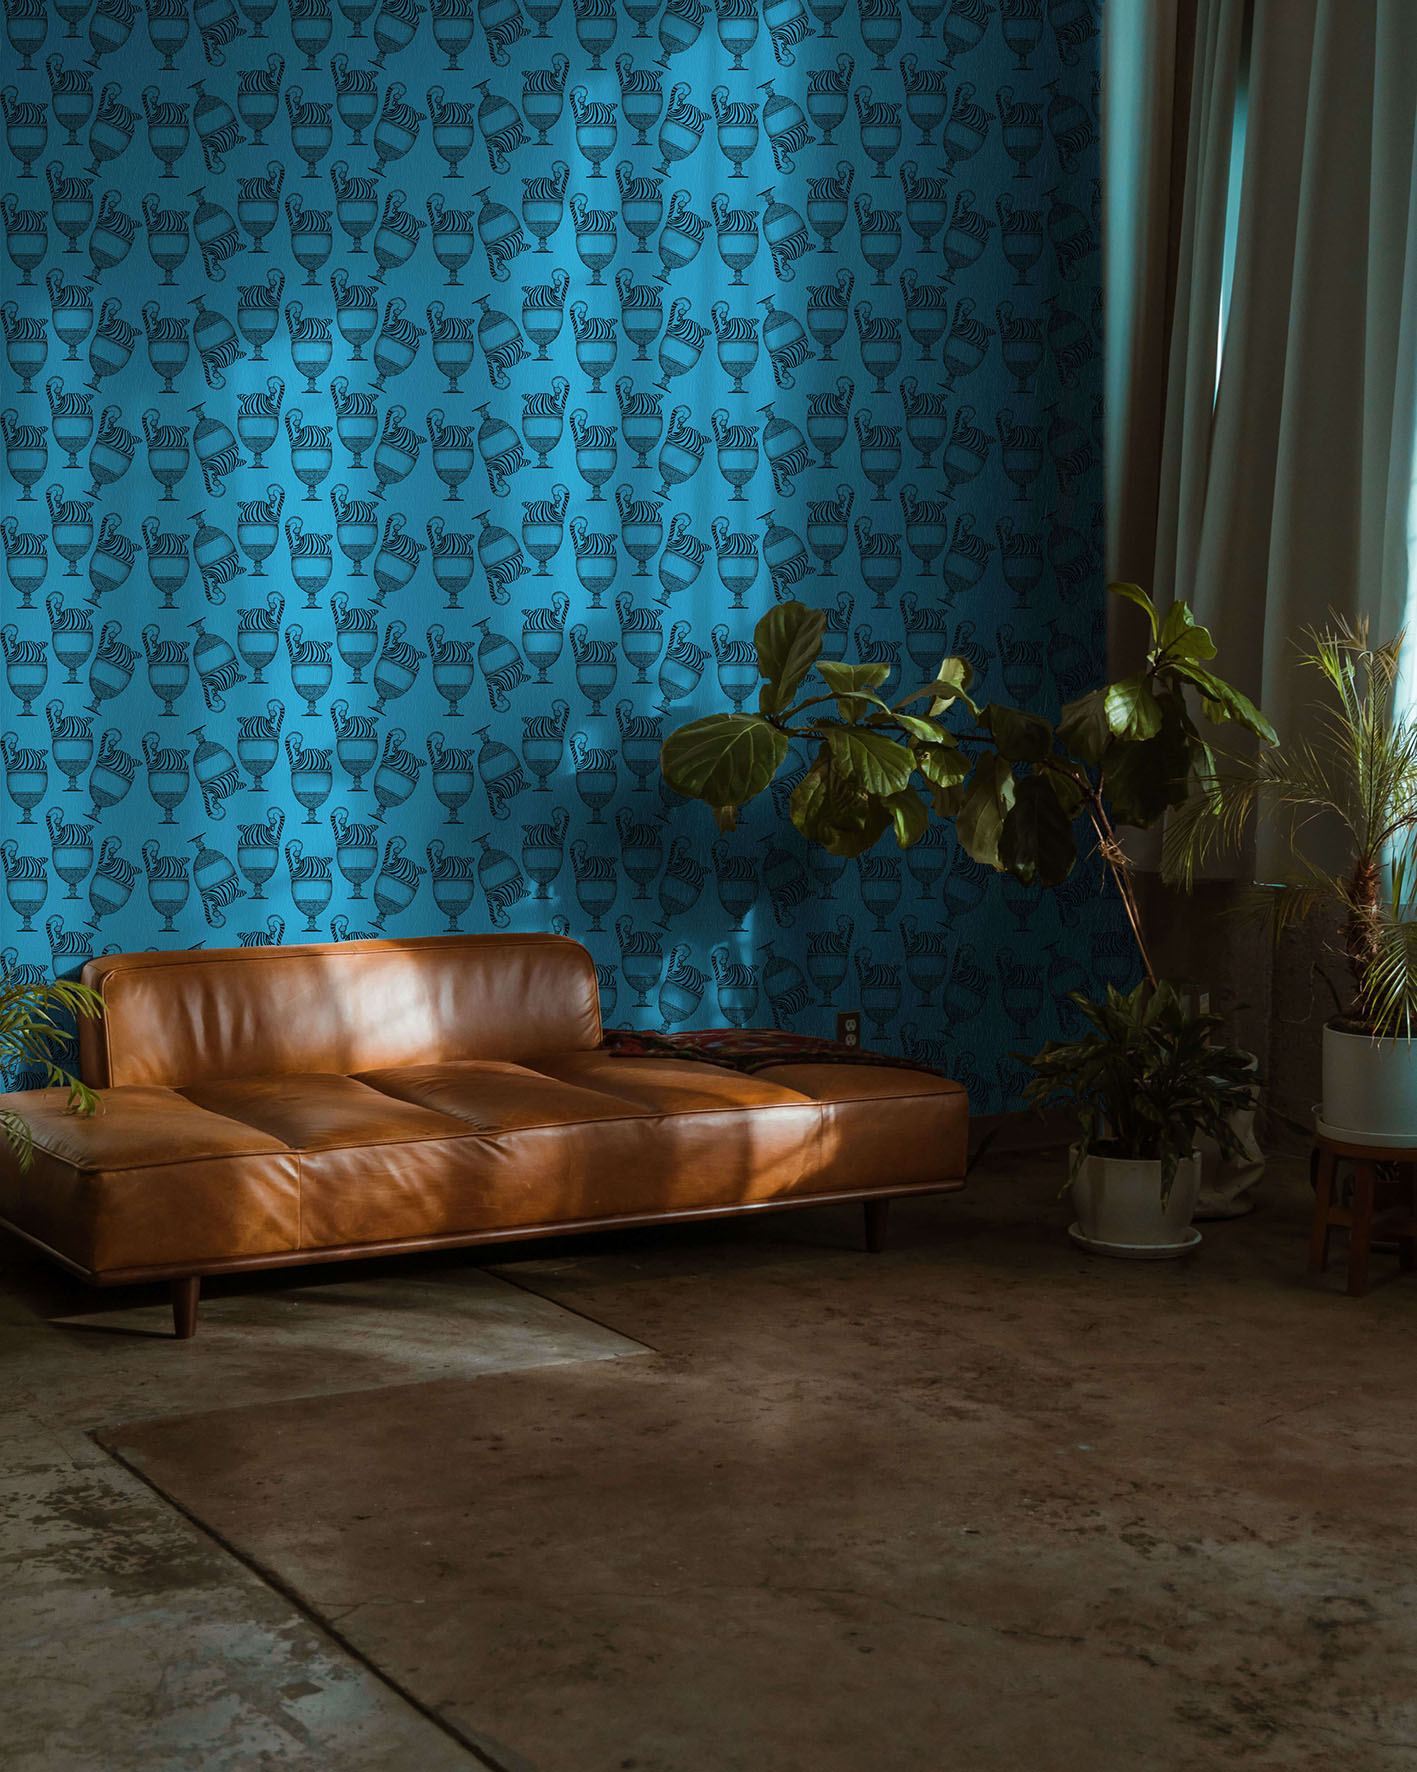 Wallpaper-Fontana-Azzurro-acquamarina-MaVoix-back-sofa-living-decor